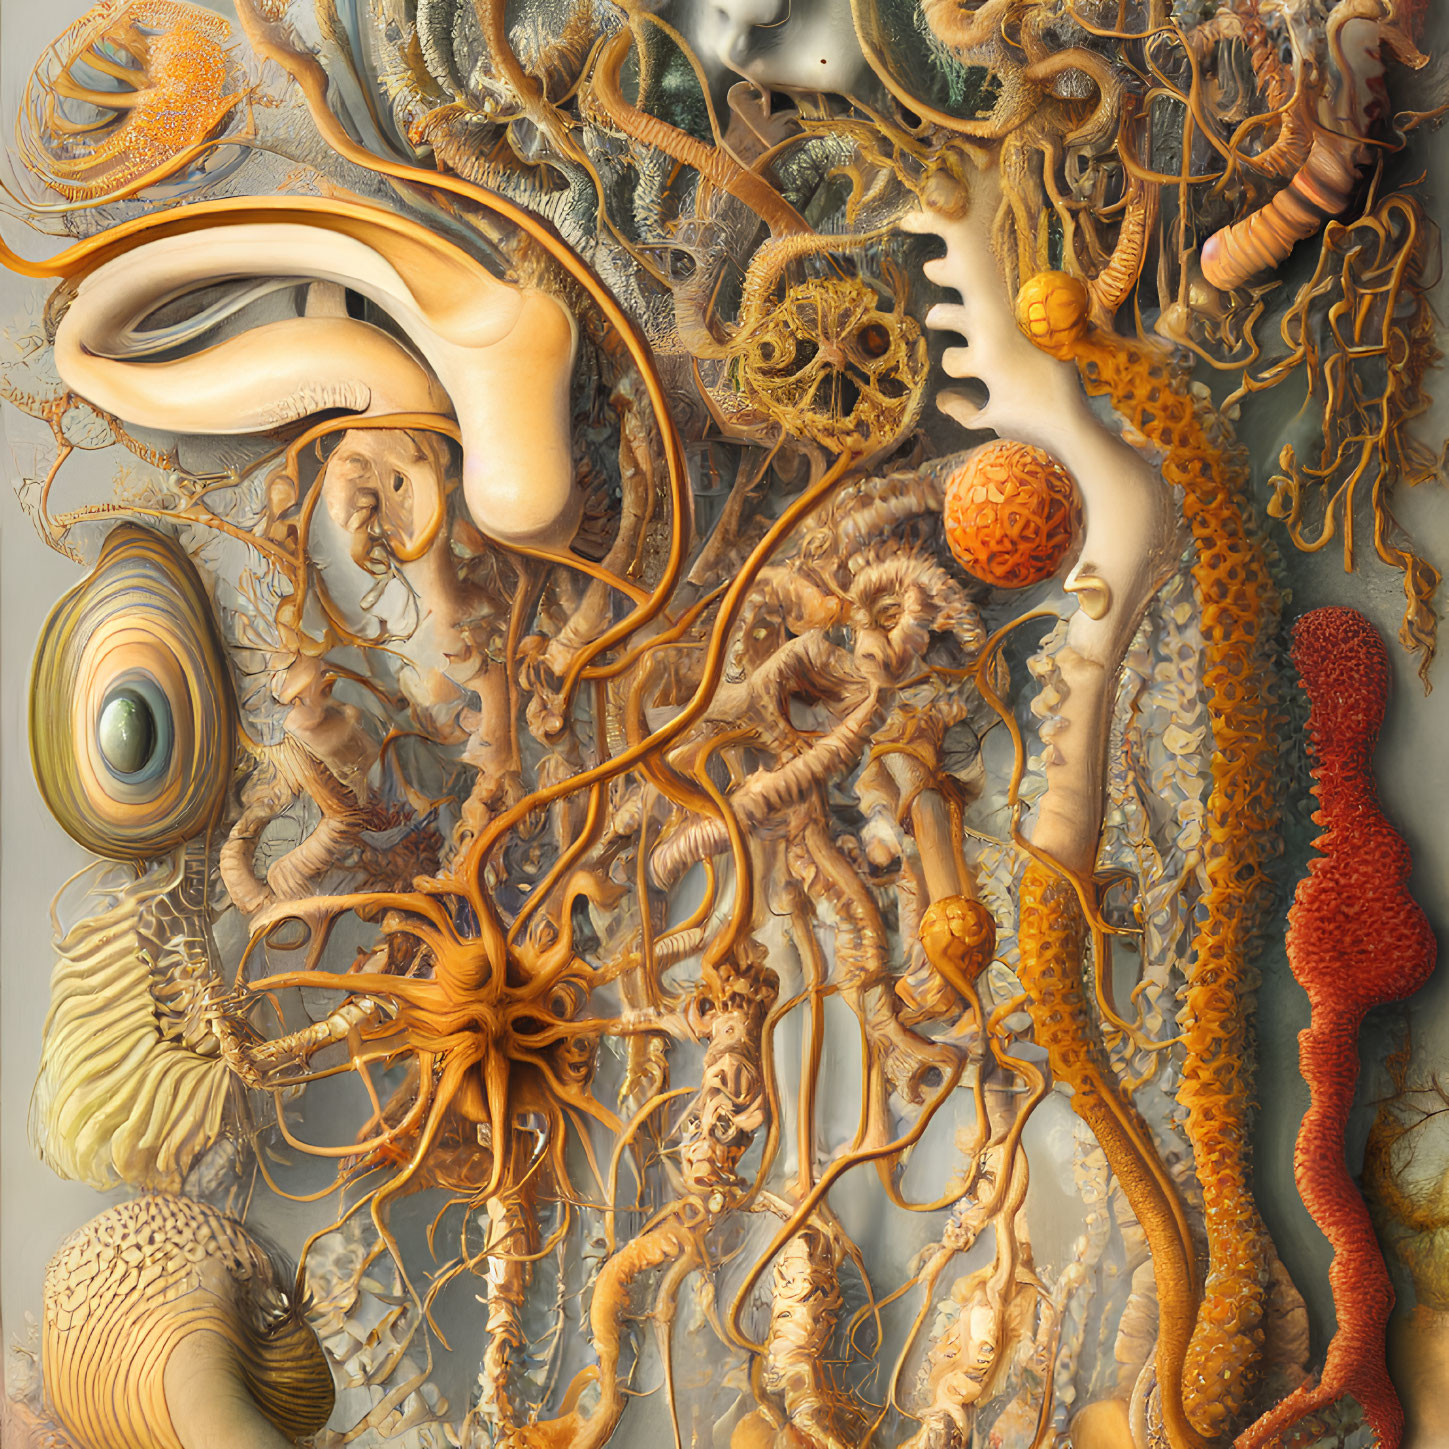 Abstract Organic Fractal Artwork in Warm Coral Hues